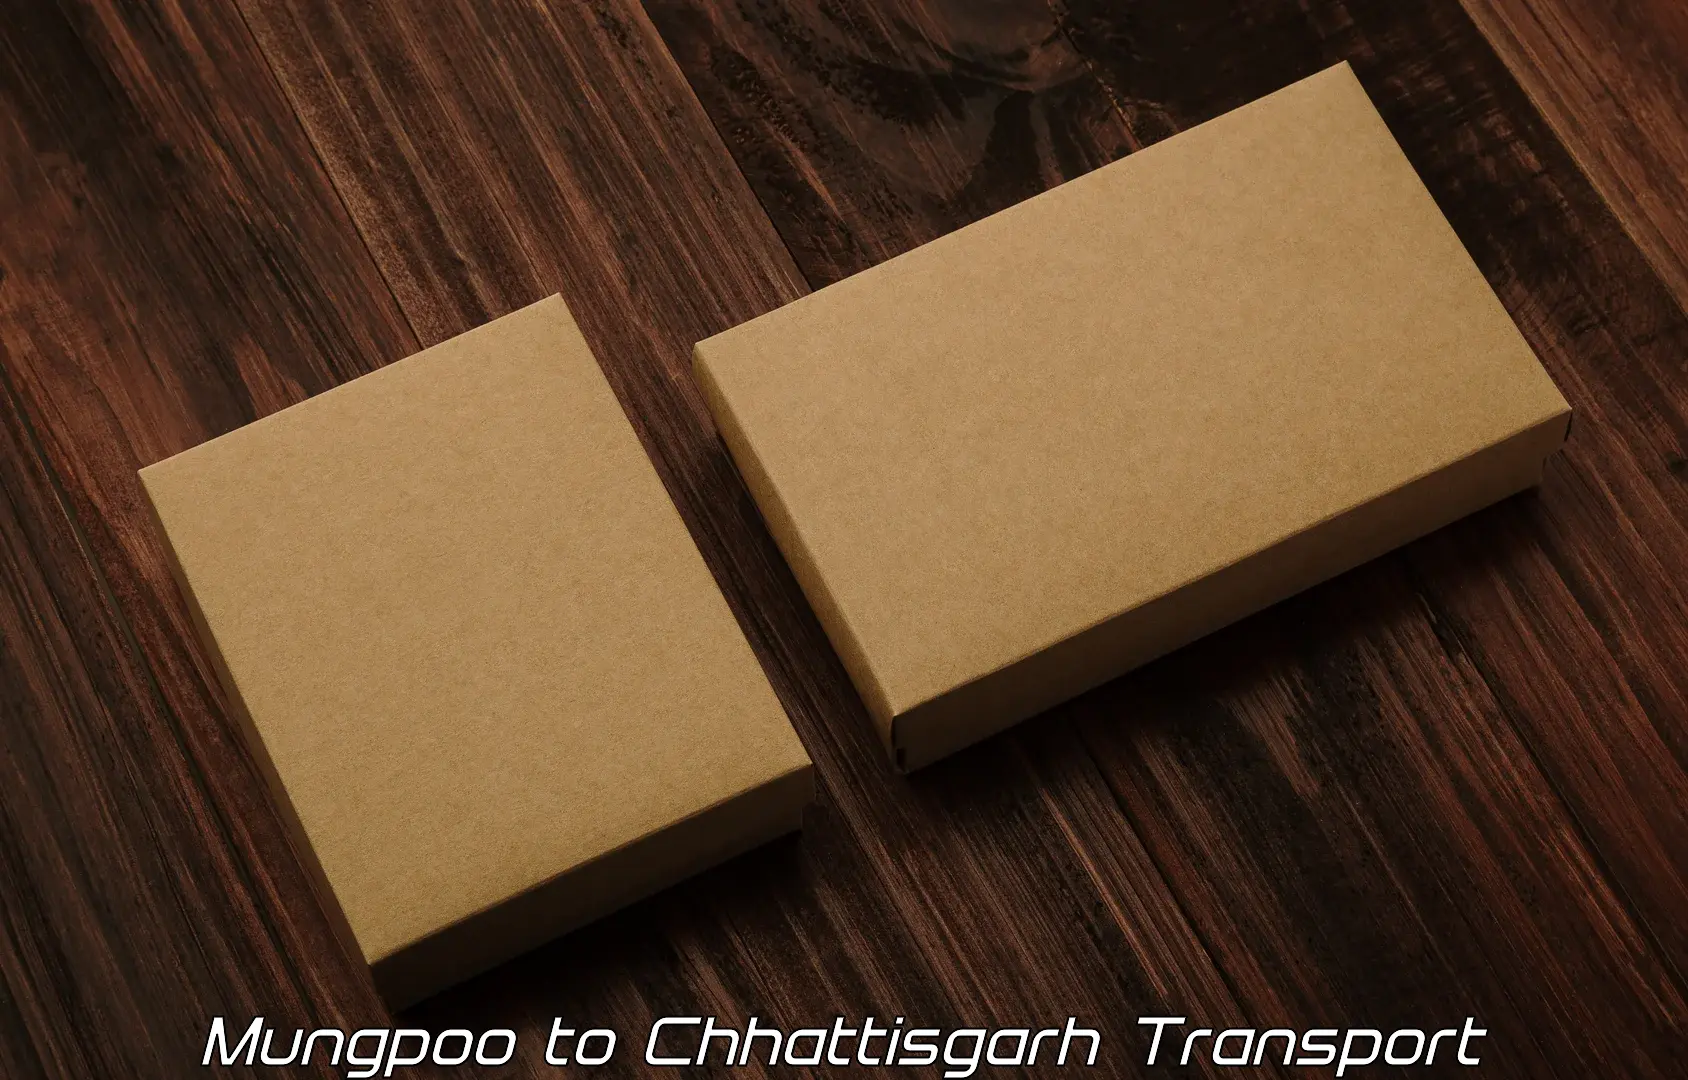 Transport in sharing Mungpoo to Khairagarh